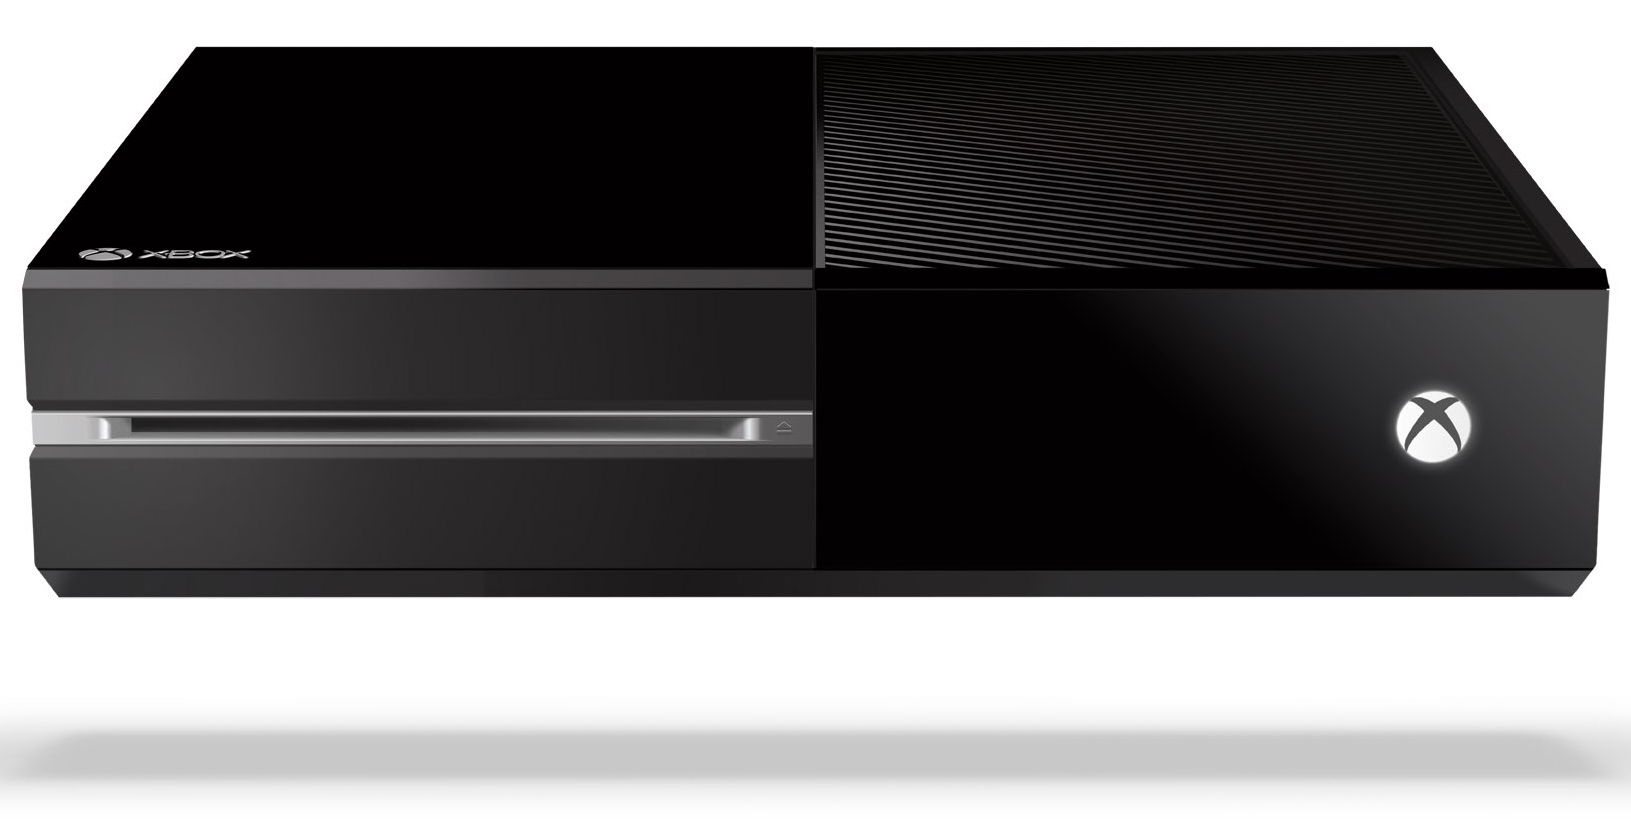  Microsoft Xbox One + Assassins Creed Unity + Assassins Creed IV Black Flag 